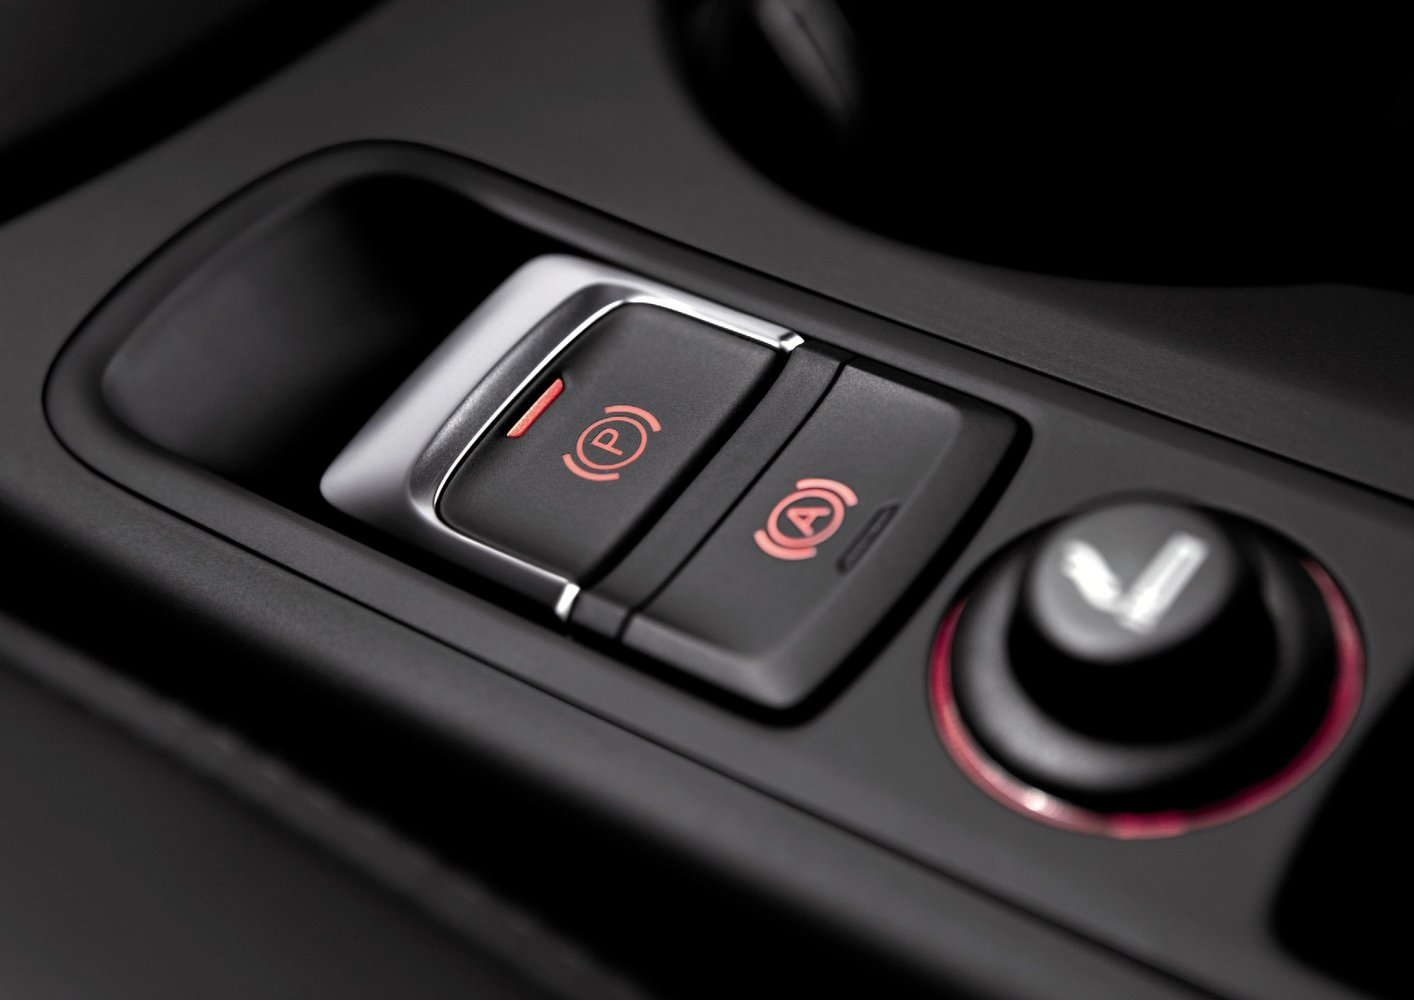 кроссовер Audi Q3 2011 - 2014г выпуска модификация 2.0 MT (140 л.с.)